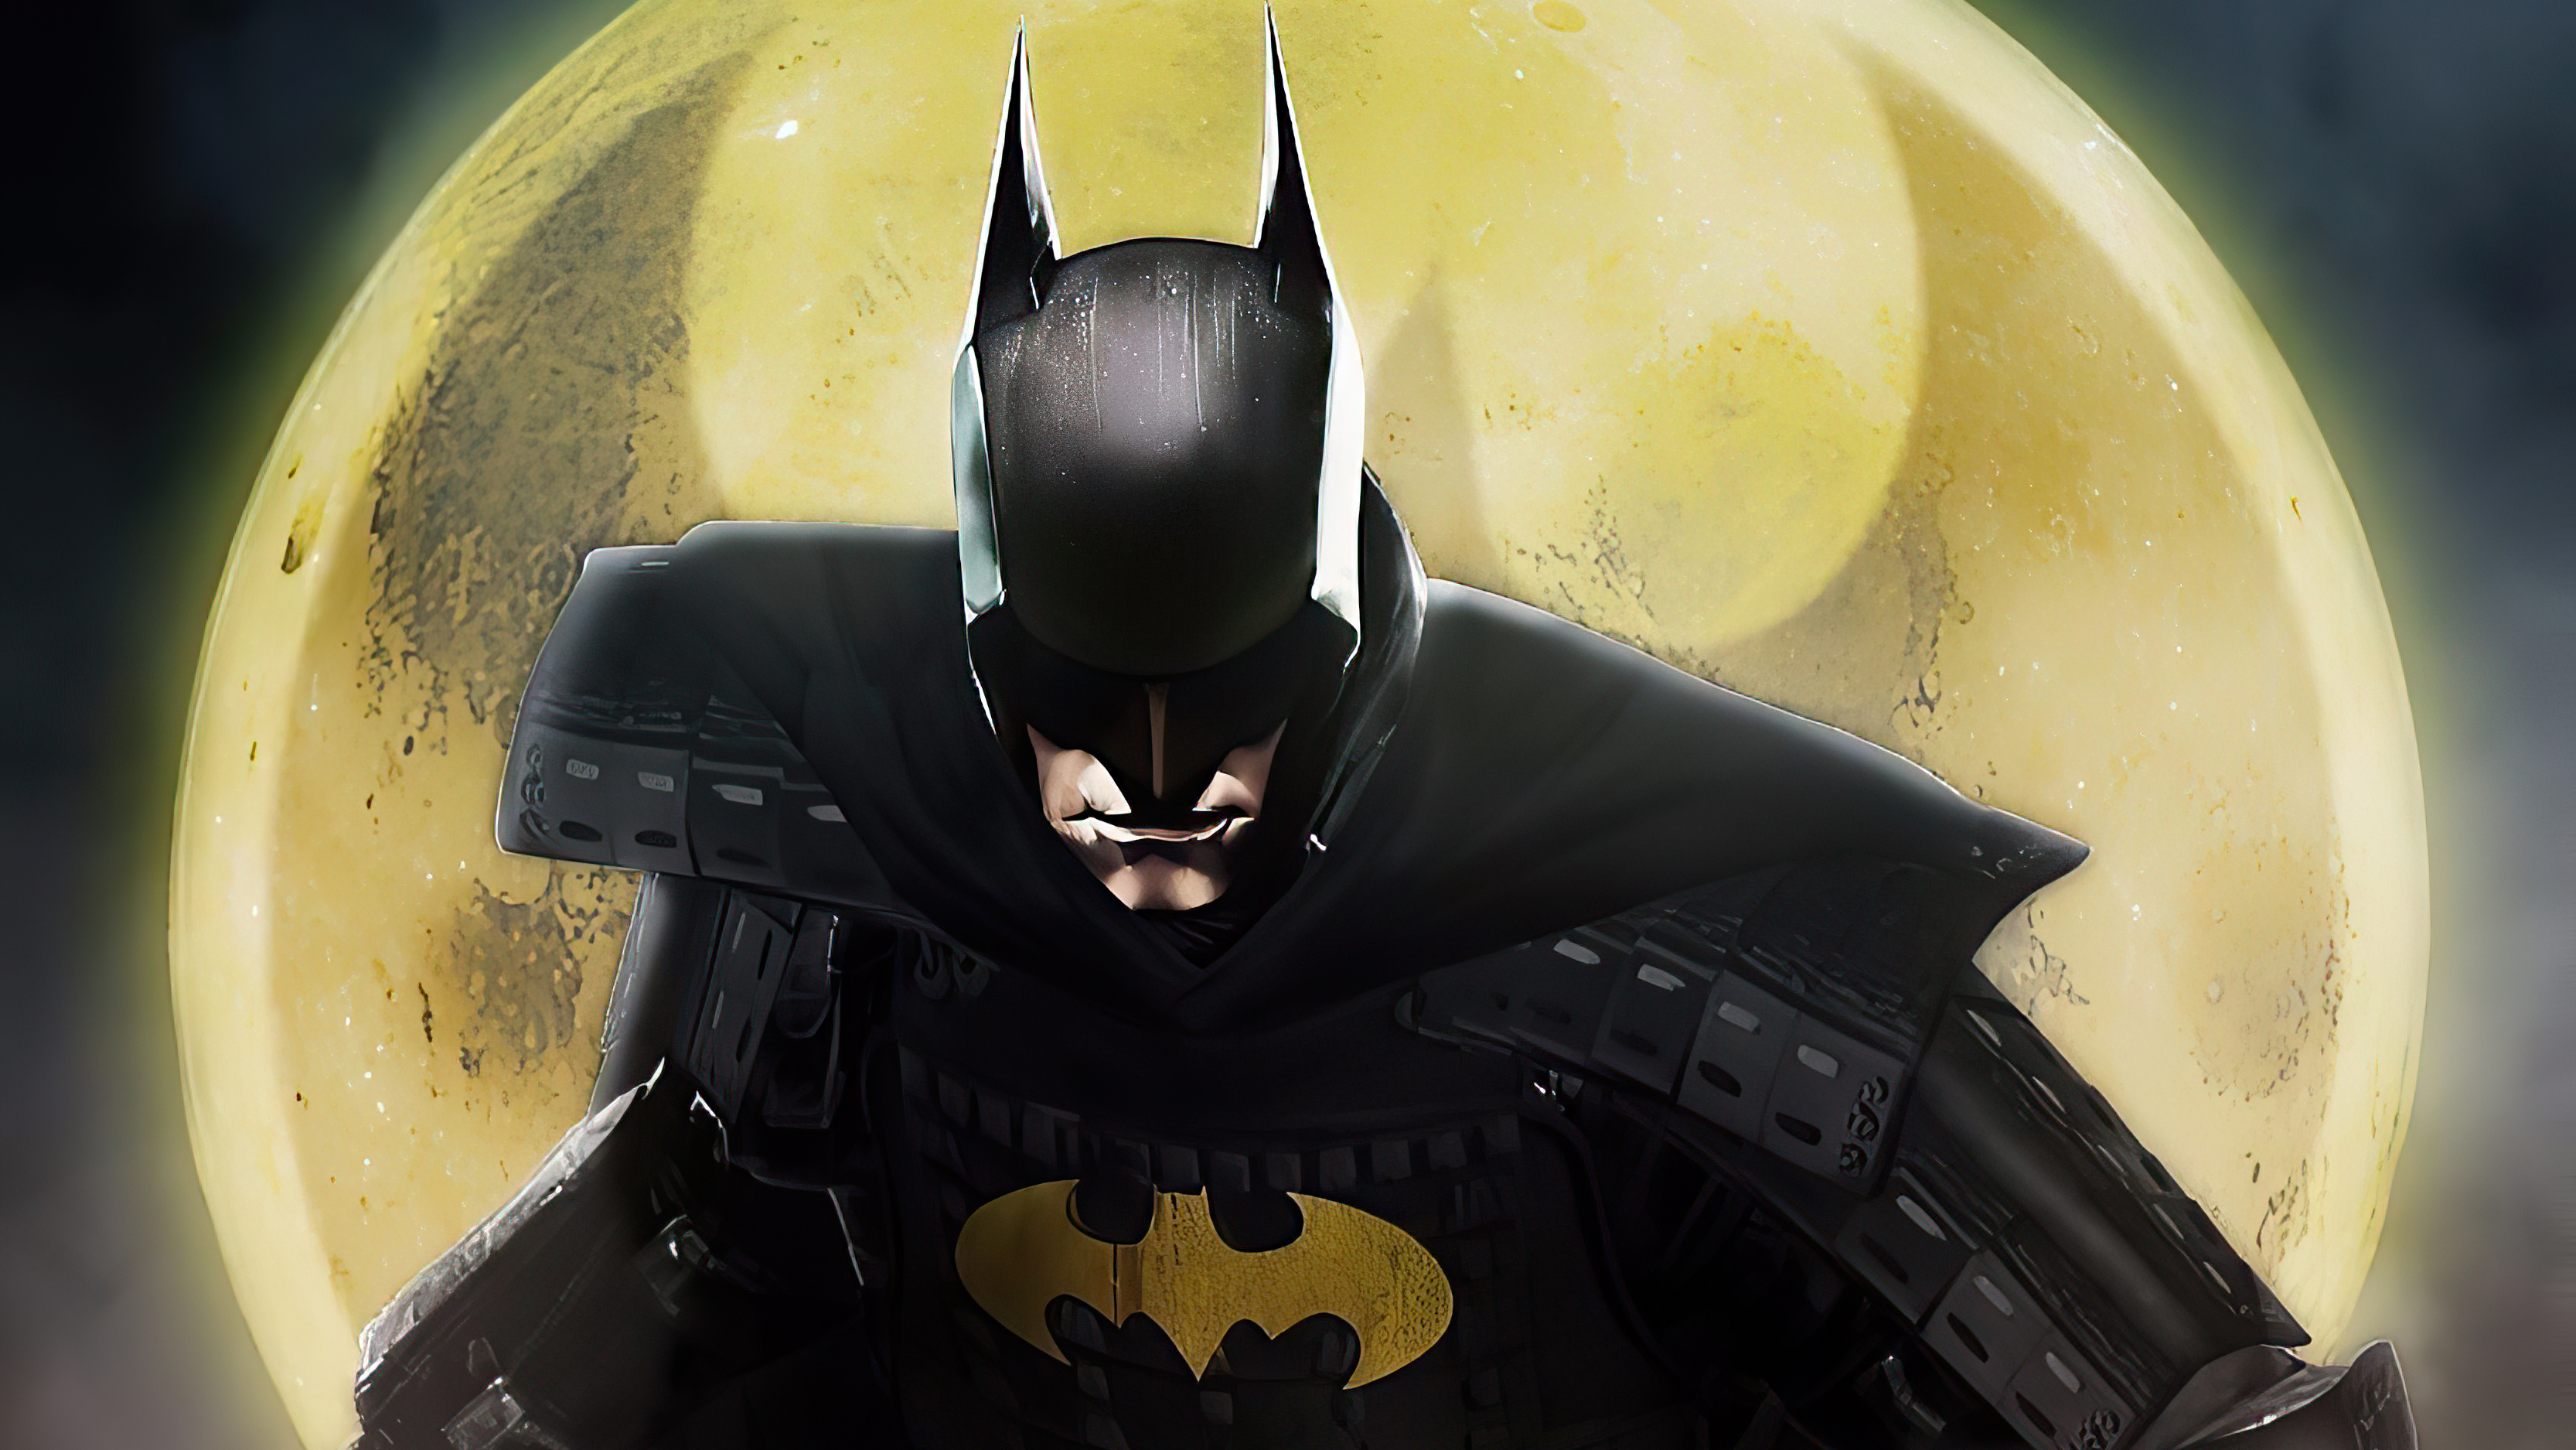 R batman. Batman: Arkham Knight. Милохин Бэтмен. Нолановский Бэтмен. Бэтмен на аву.